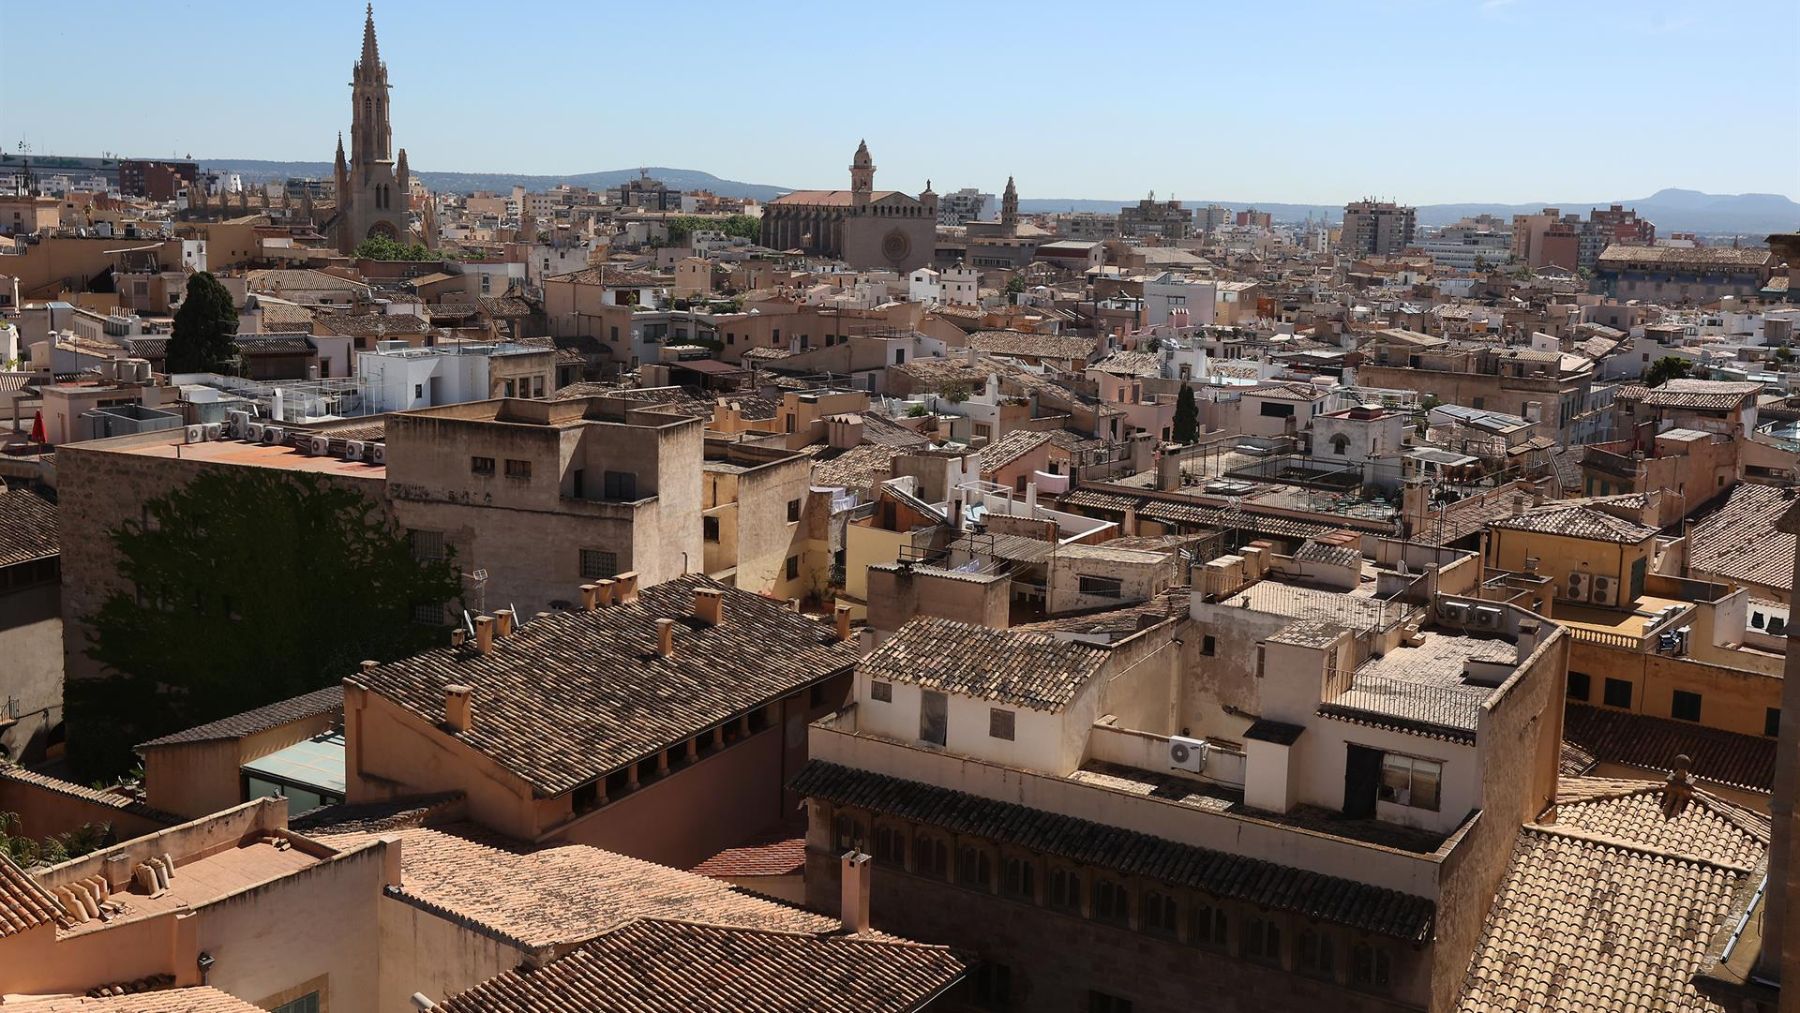 Vista panorámica del centro histórico de Palma.